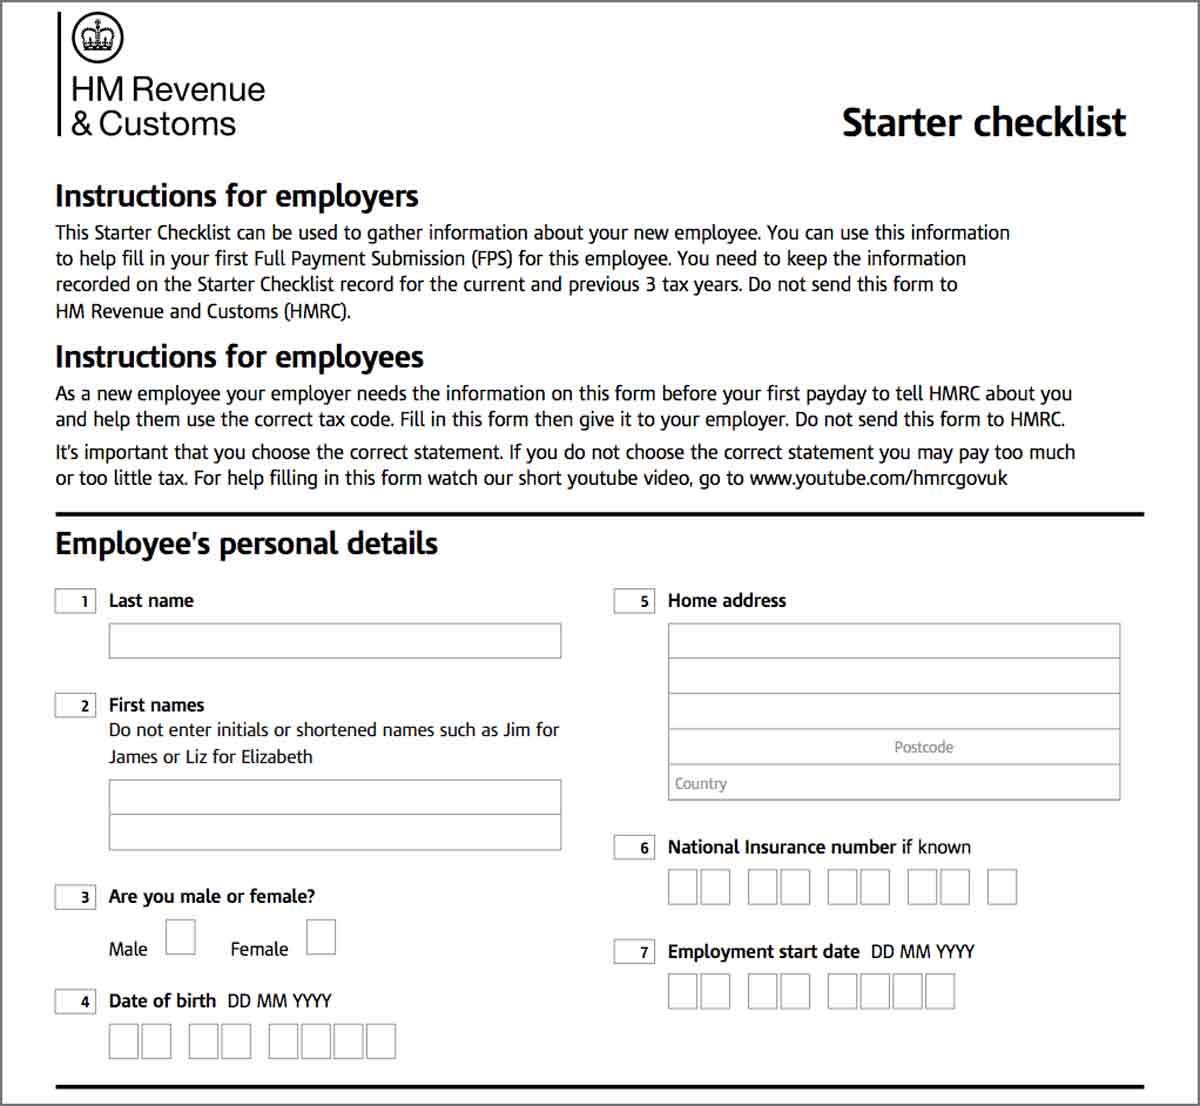 hmrc-starter-checklist-explained-guide-faq-for-employers